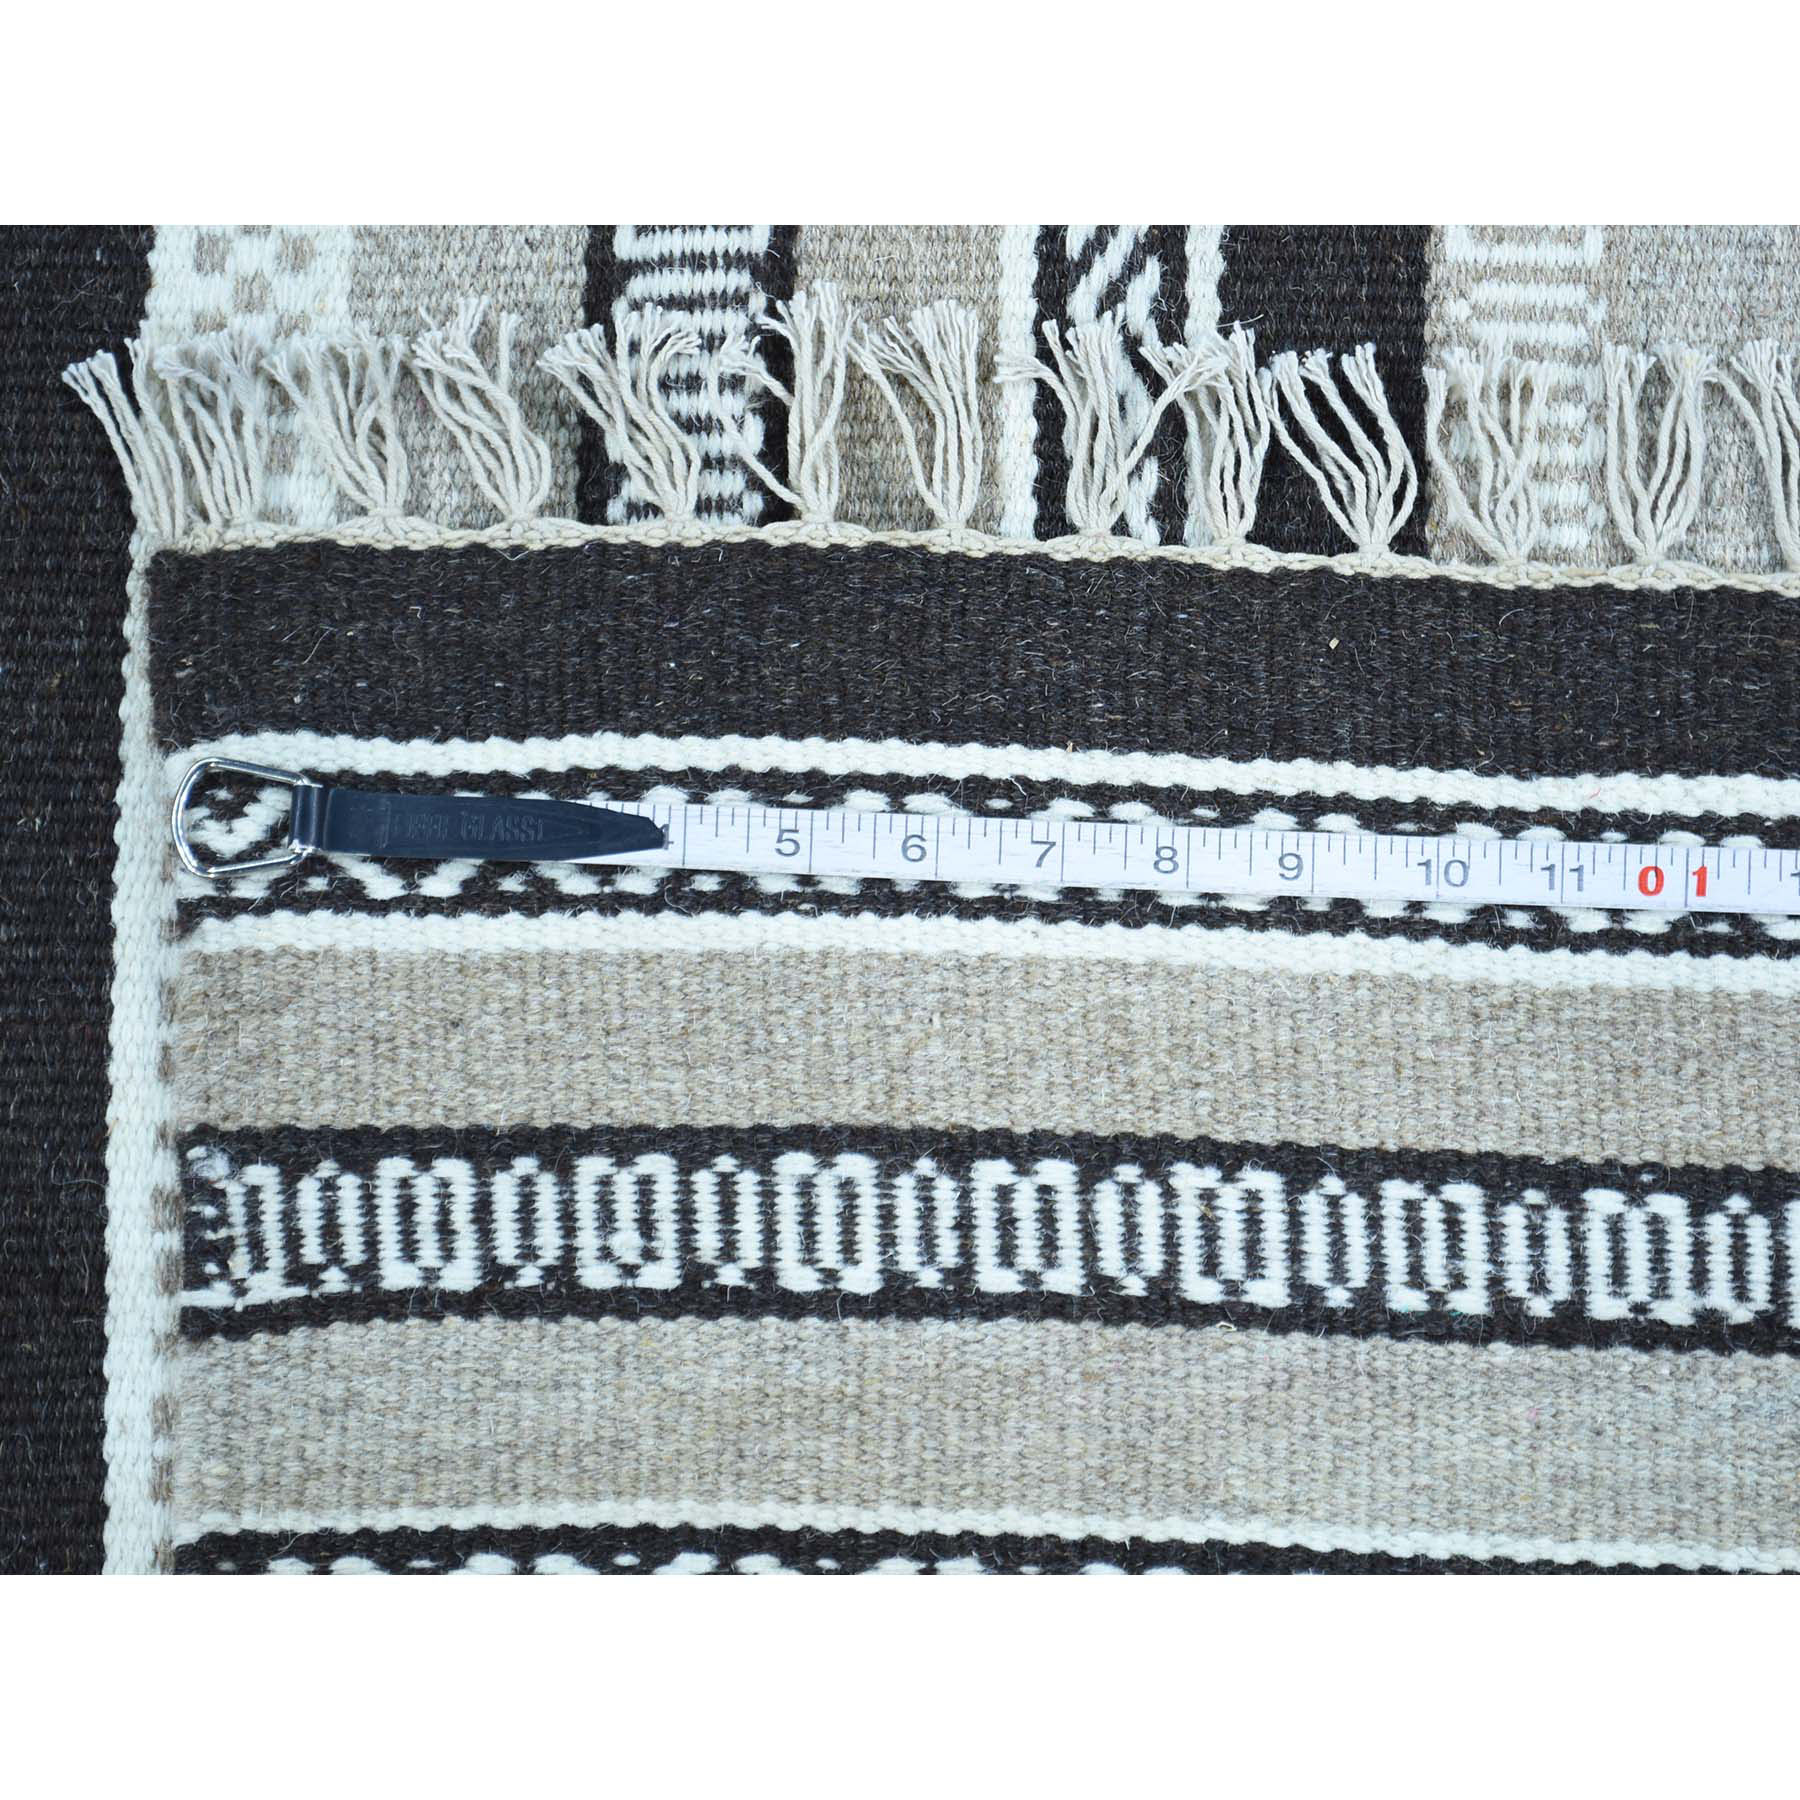 4-1 x6- Flat Weave Reversible Kilim Pure Wool Hand-Woven Striped Rug 